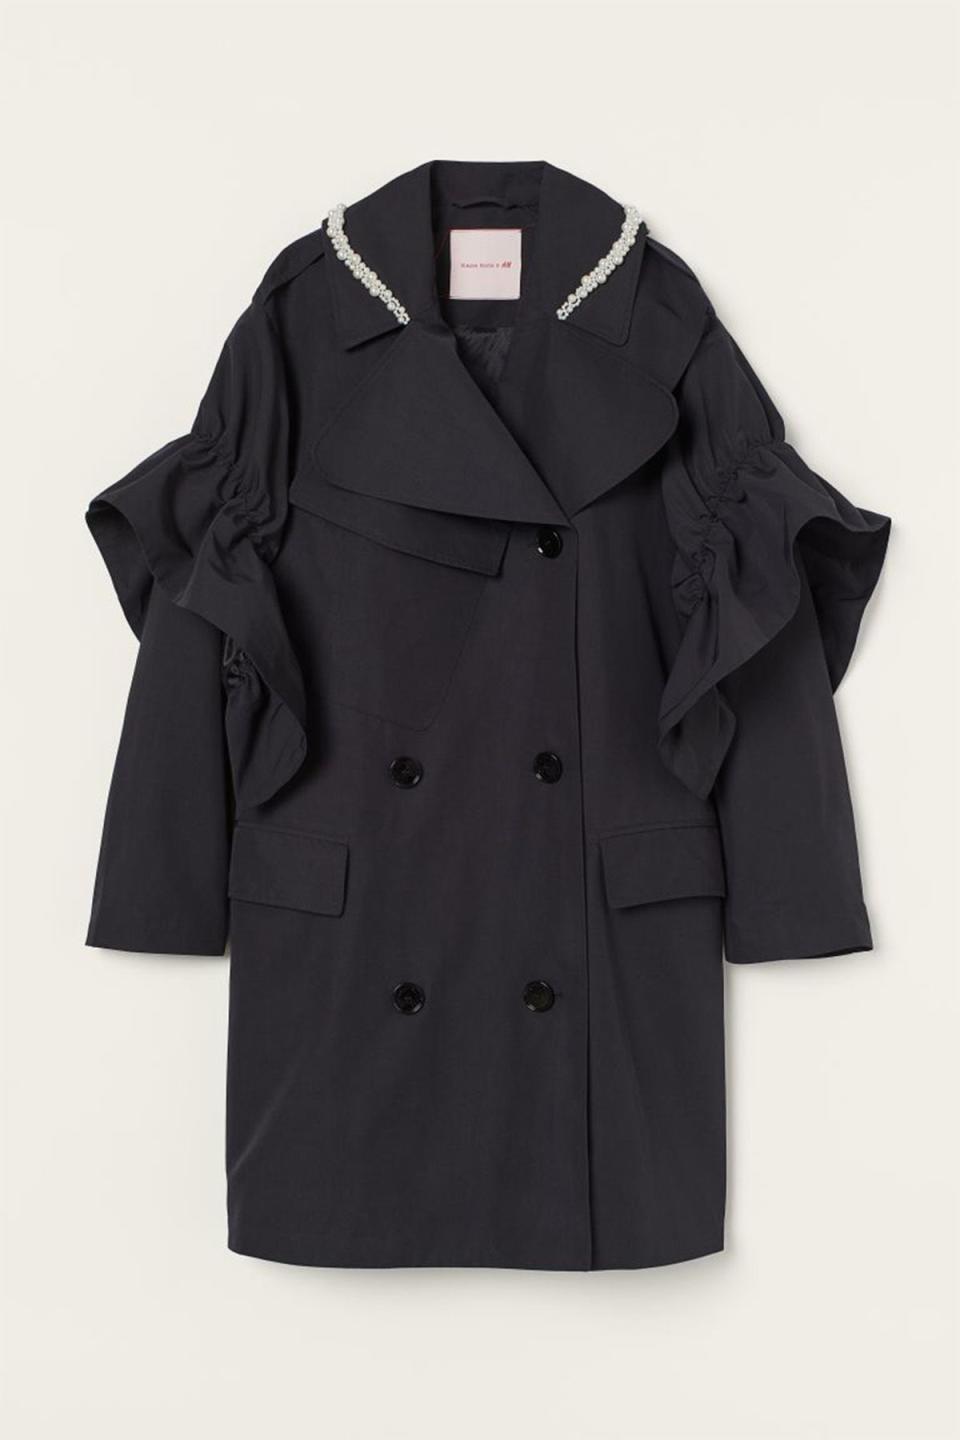 9) Oversized A-Line Coat